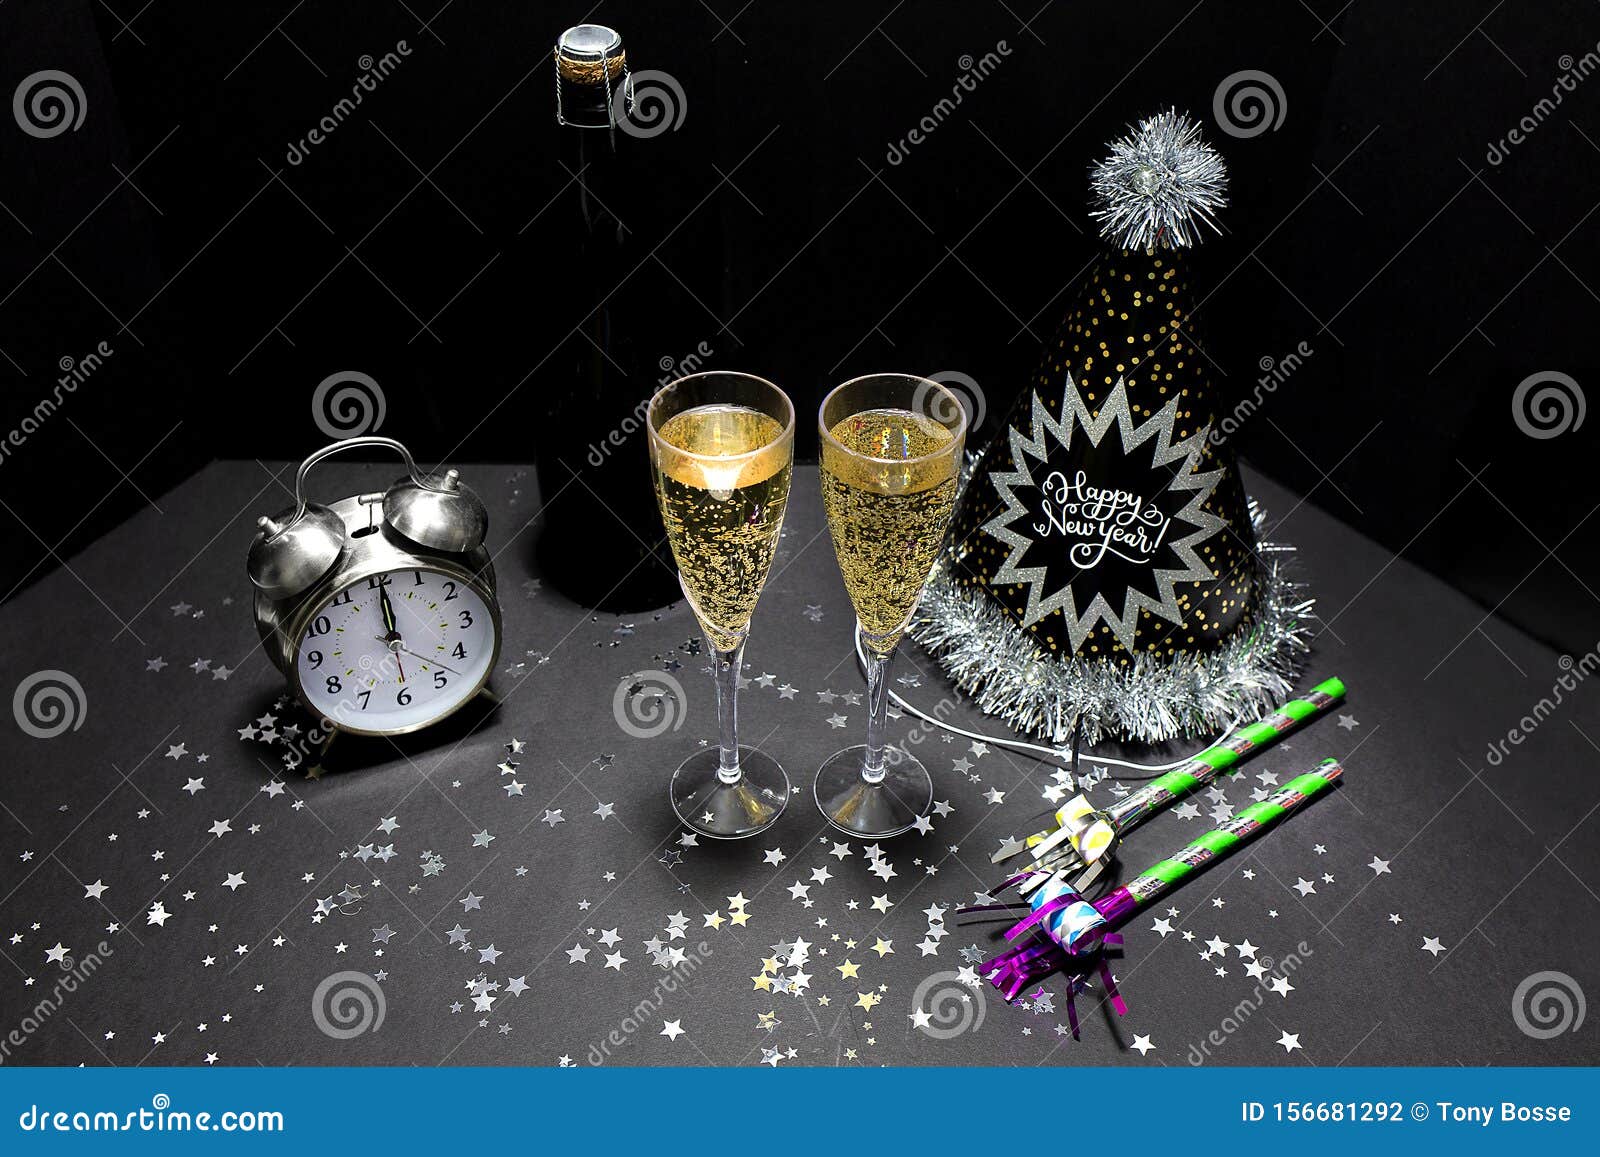 new yearÃ¢â¬â¢s eve champagne with party items, high vantage point